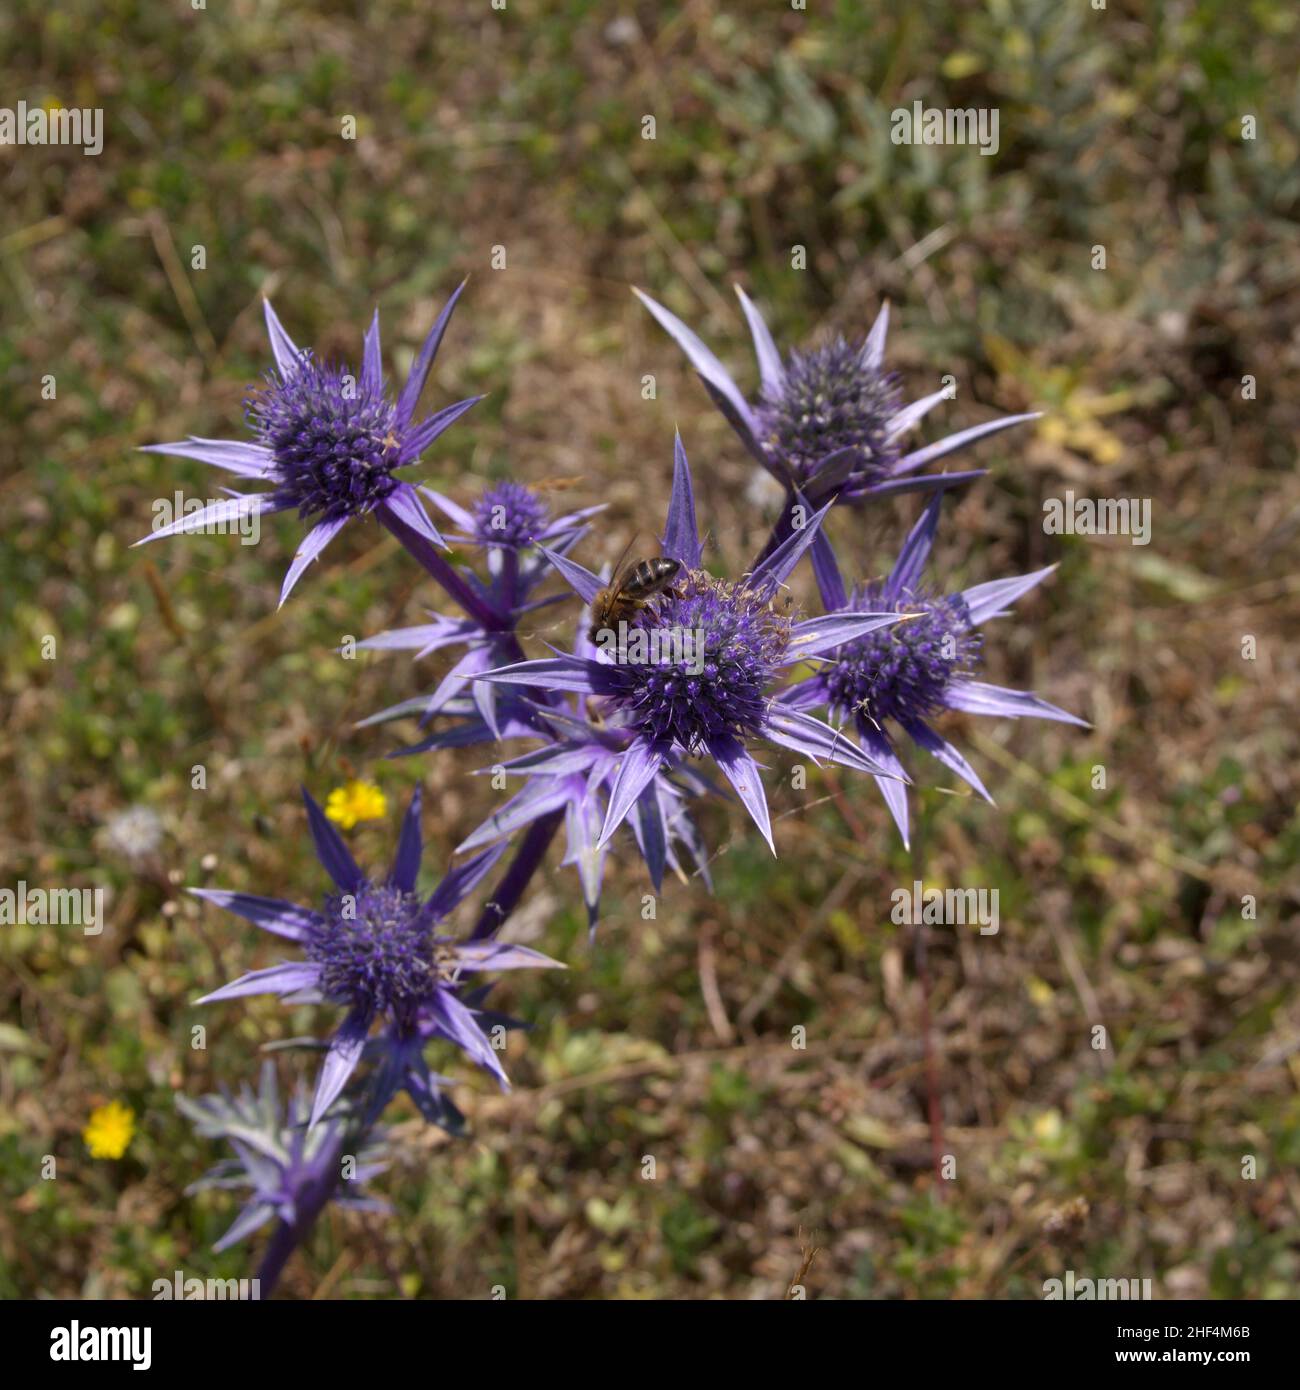 flora of Cantabria - blue flower heads of Eryngium bourgatii, Meditarranean sea holly Stock Photo